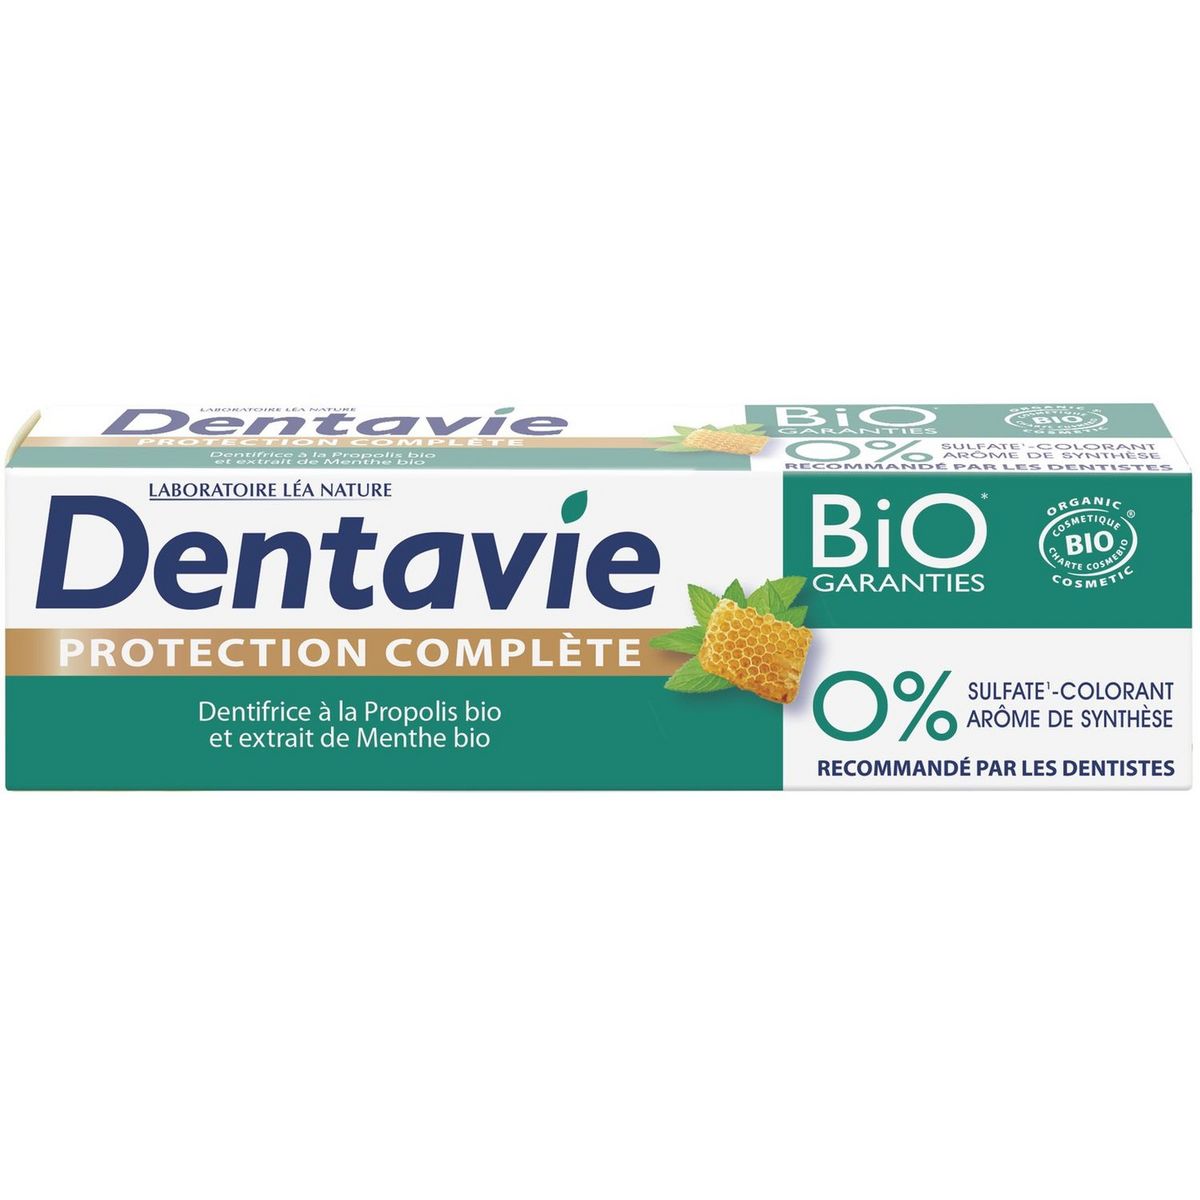 DENTAVIE Dentifrice protection complete 75ml